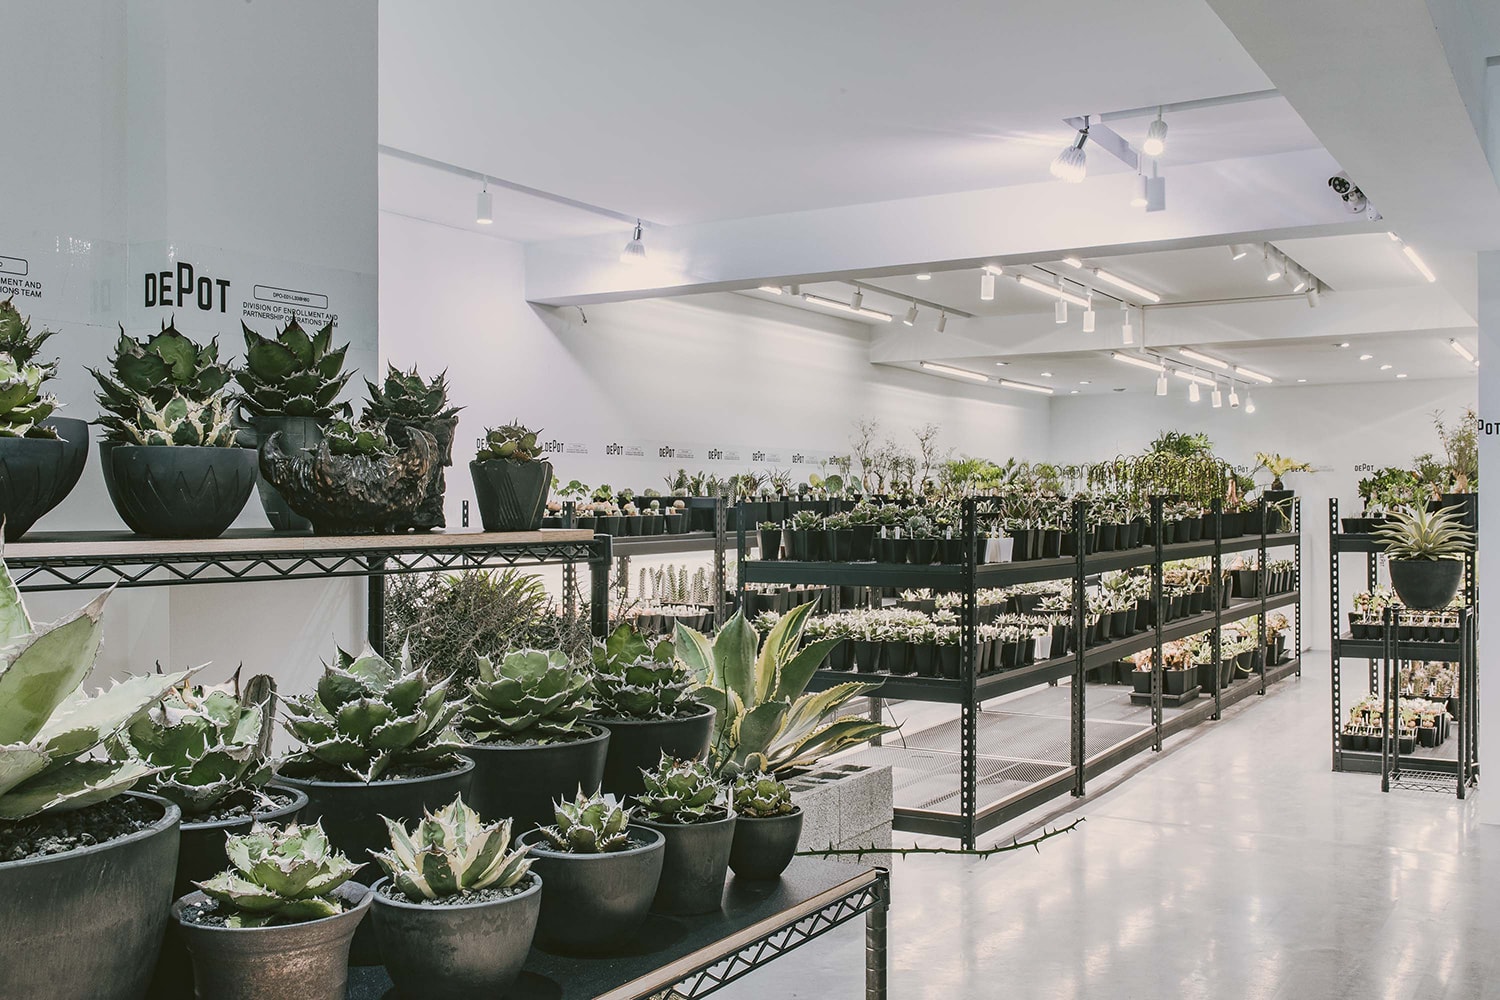 INVINCIBLE 全新生活美感體驗品牌 DEPOT 推出「CAUDEX MARKET 塊根植物市集」